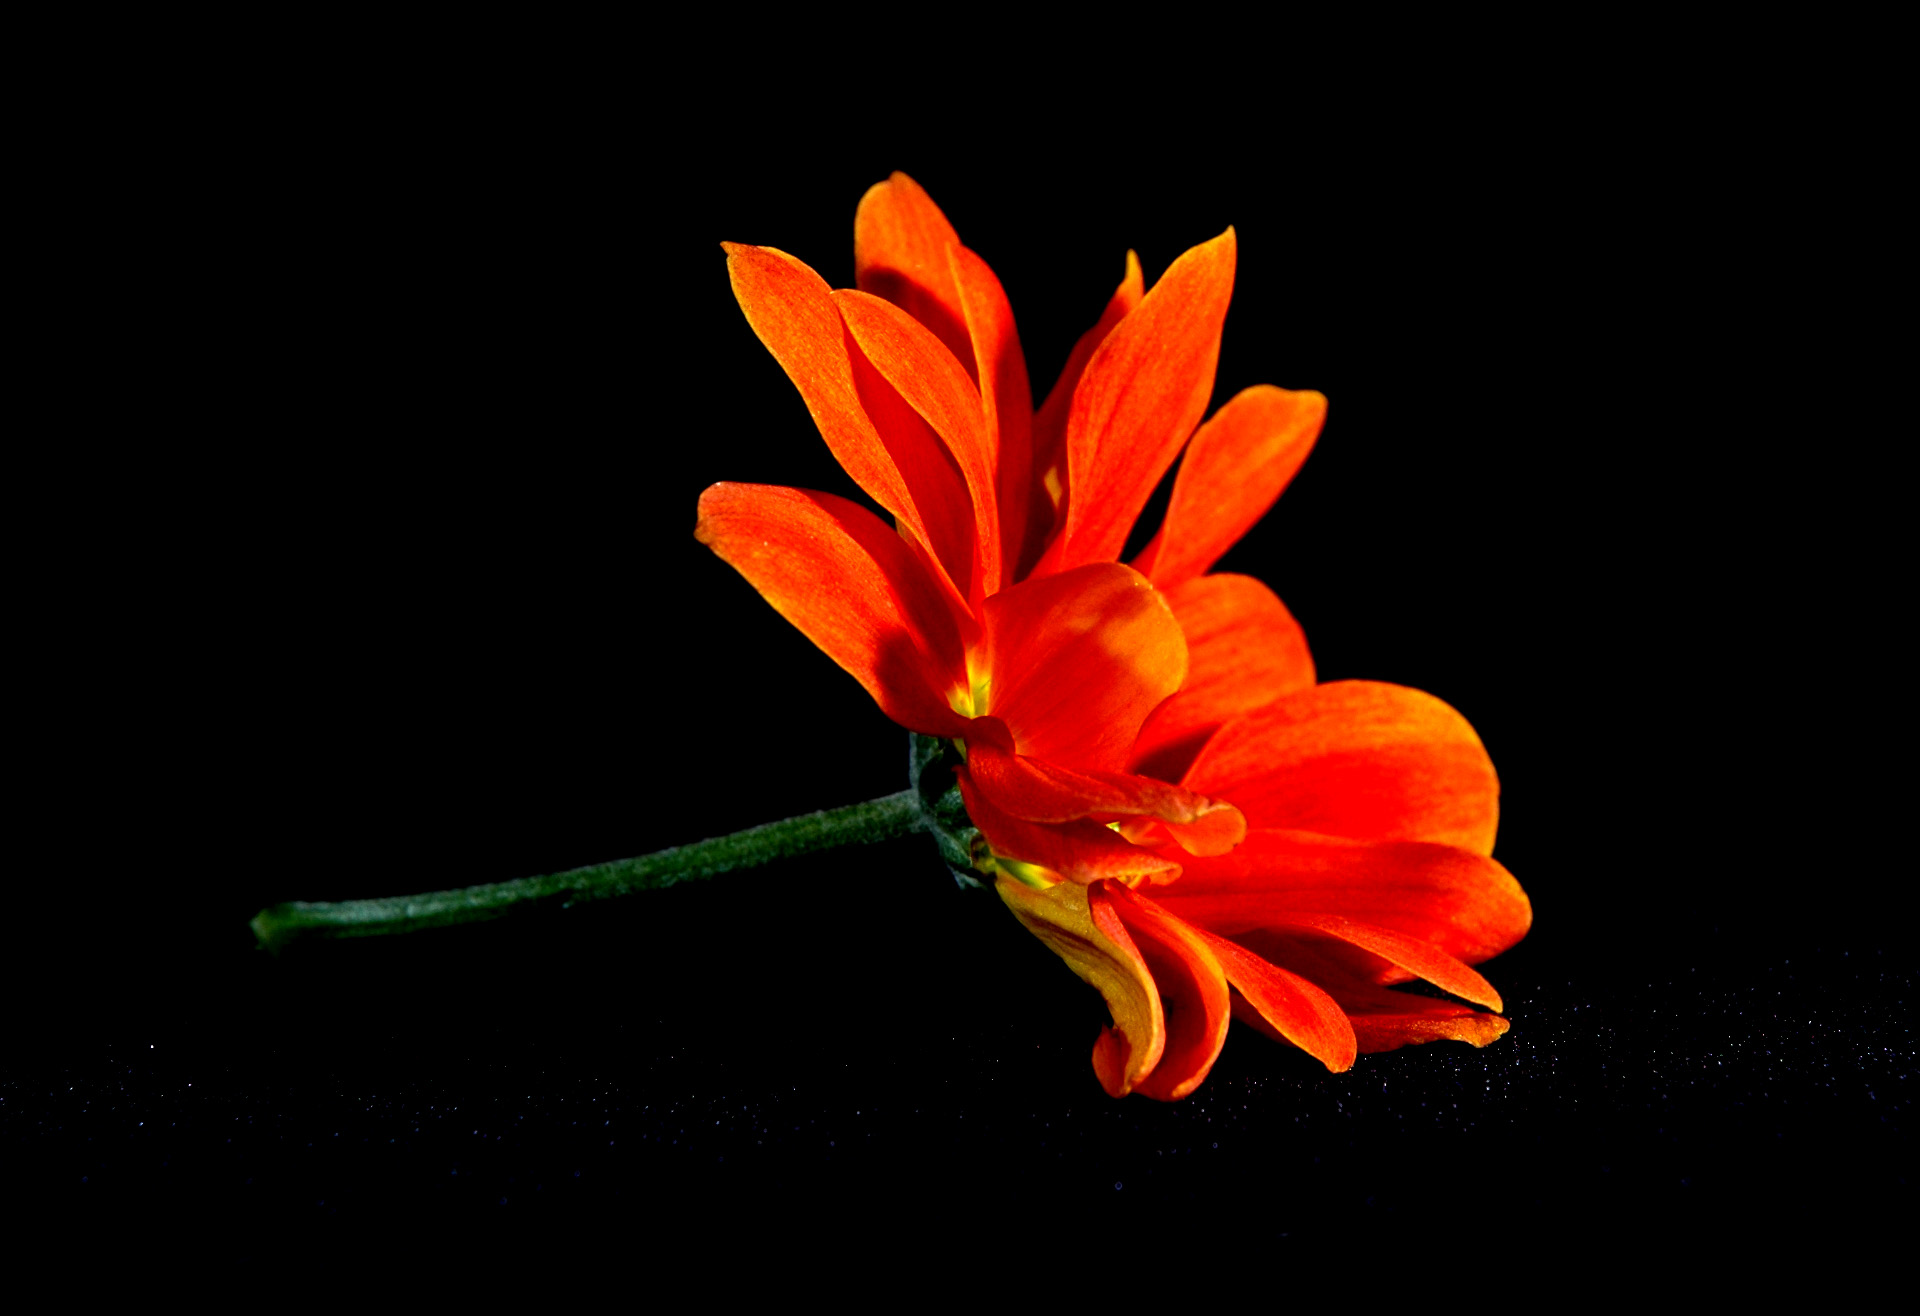 Vibrant orange flower against a dark background.